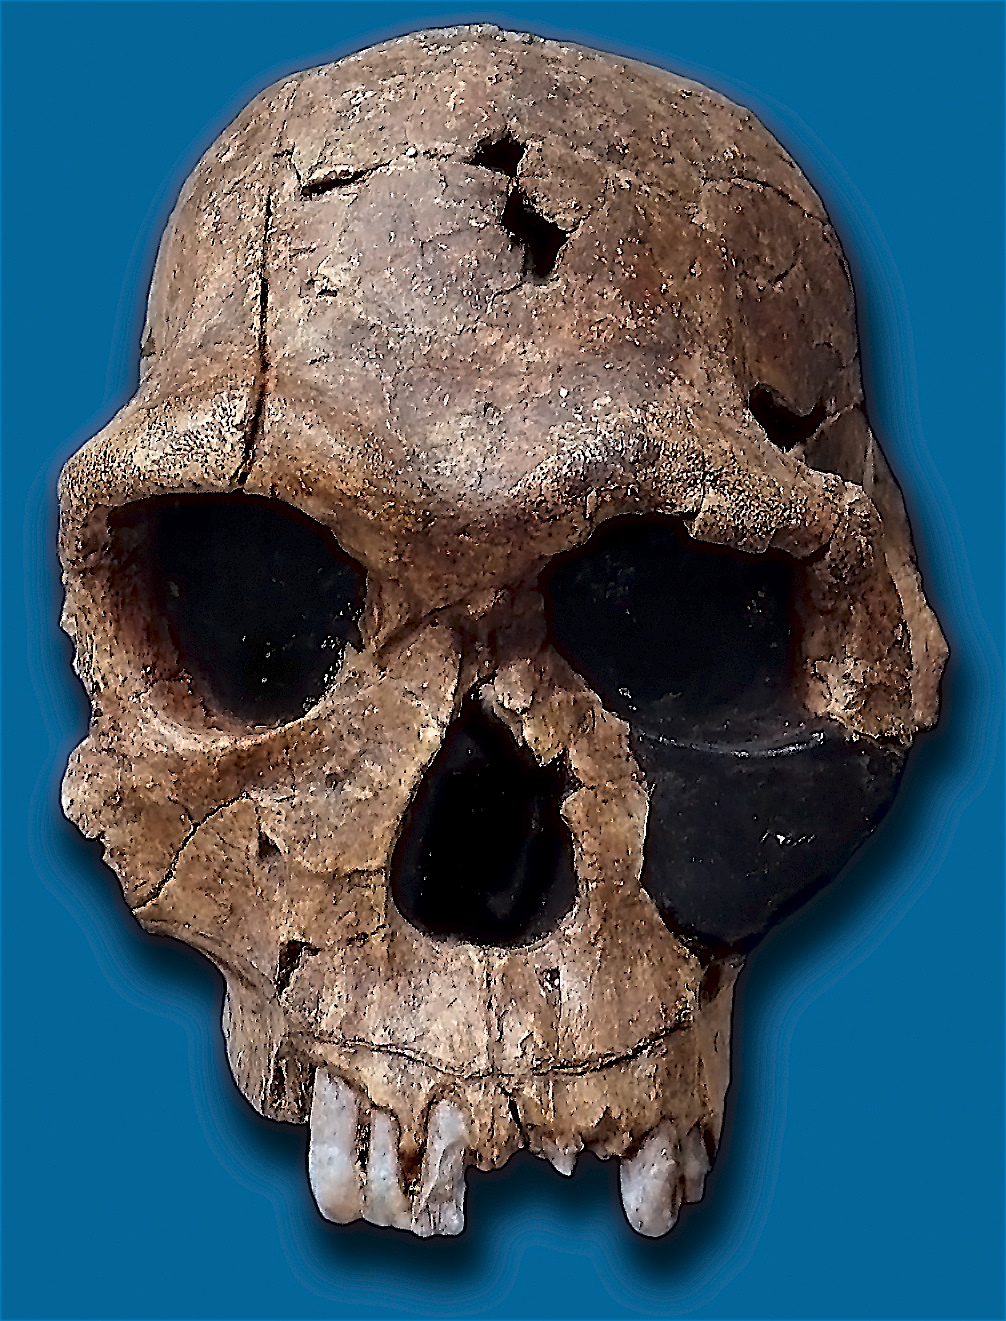 Replica of fossil skull of Homo habilis. Fossil number KNM ER 1813, found at Koobi Fora, Kenya.